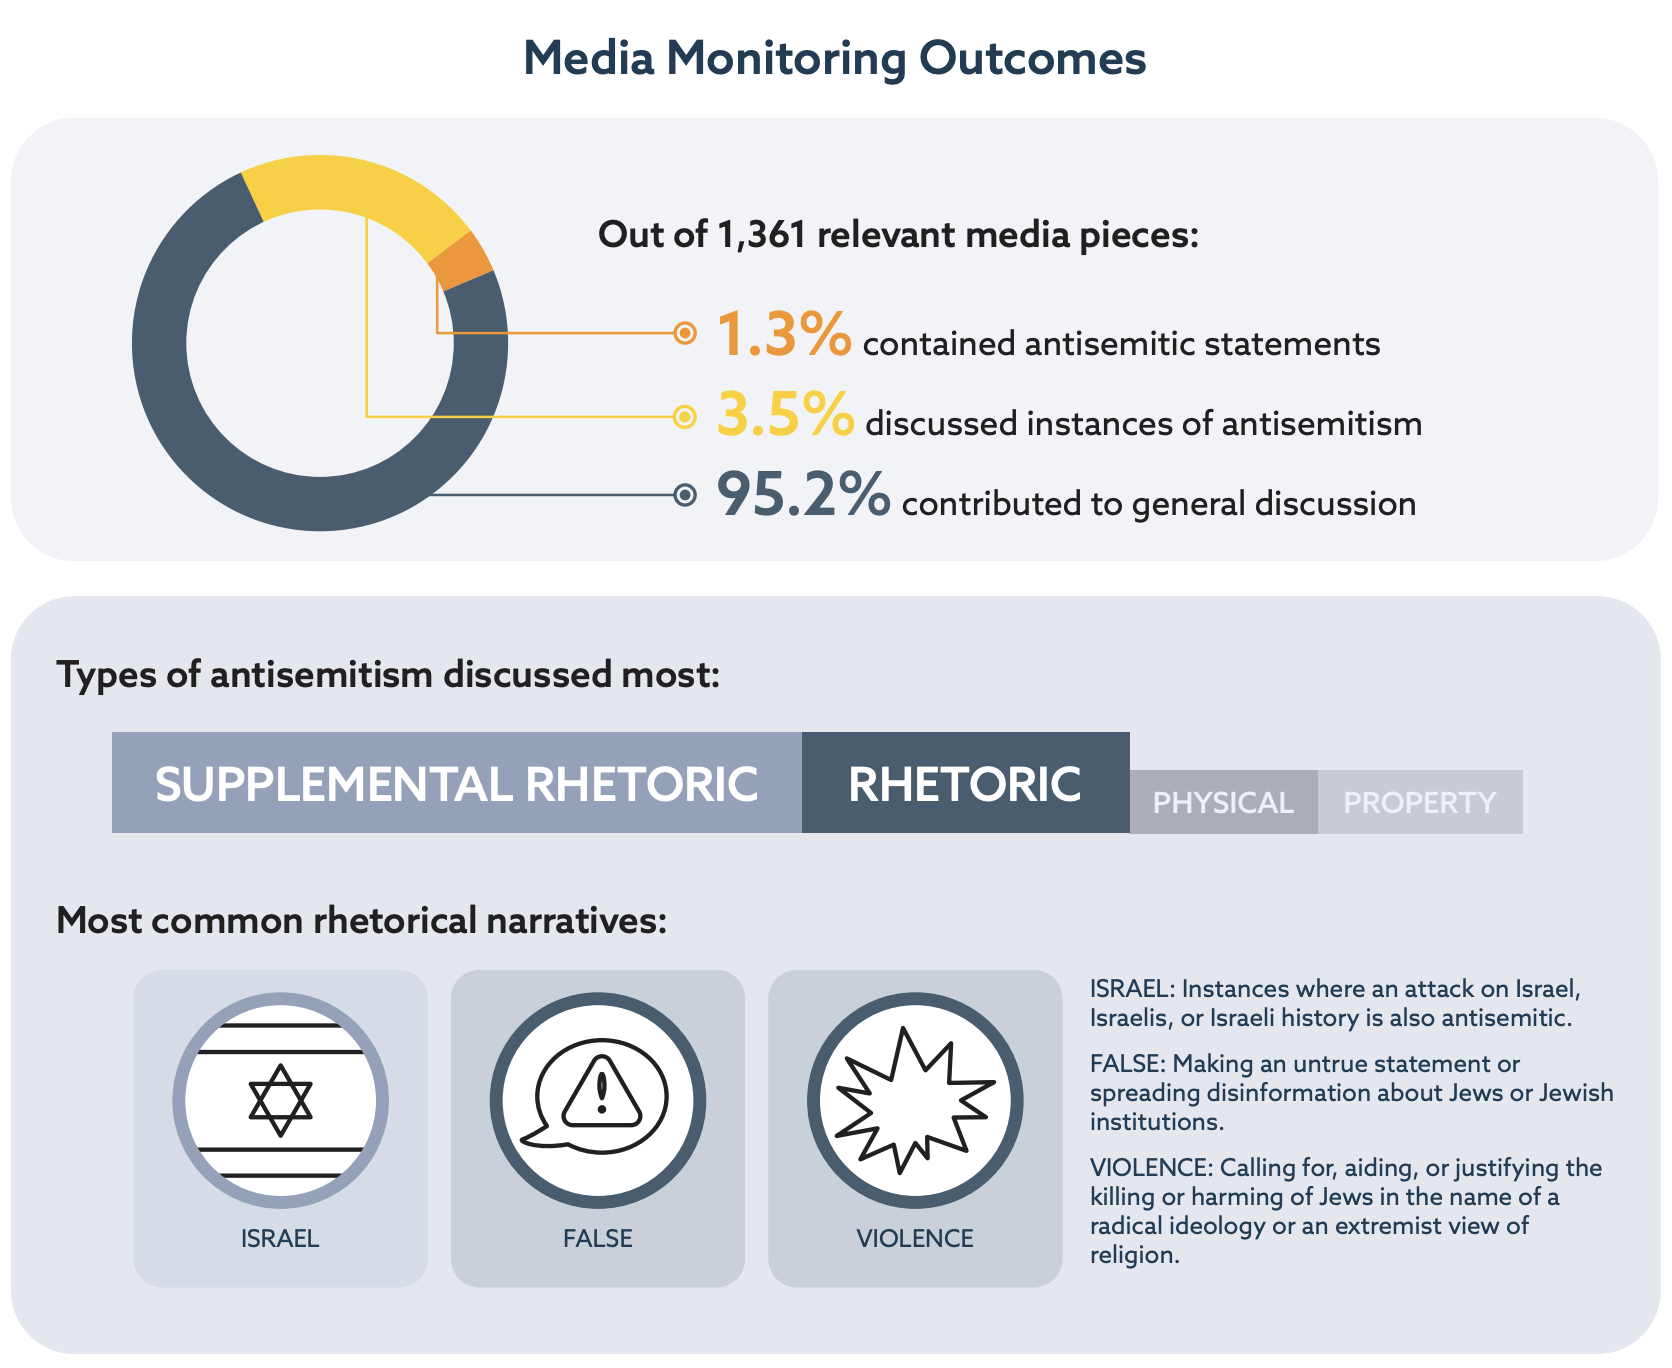 Media monitoring outcomes